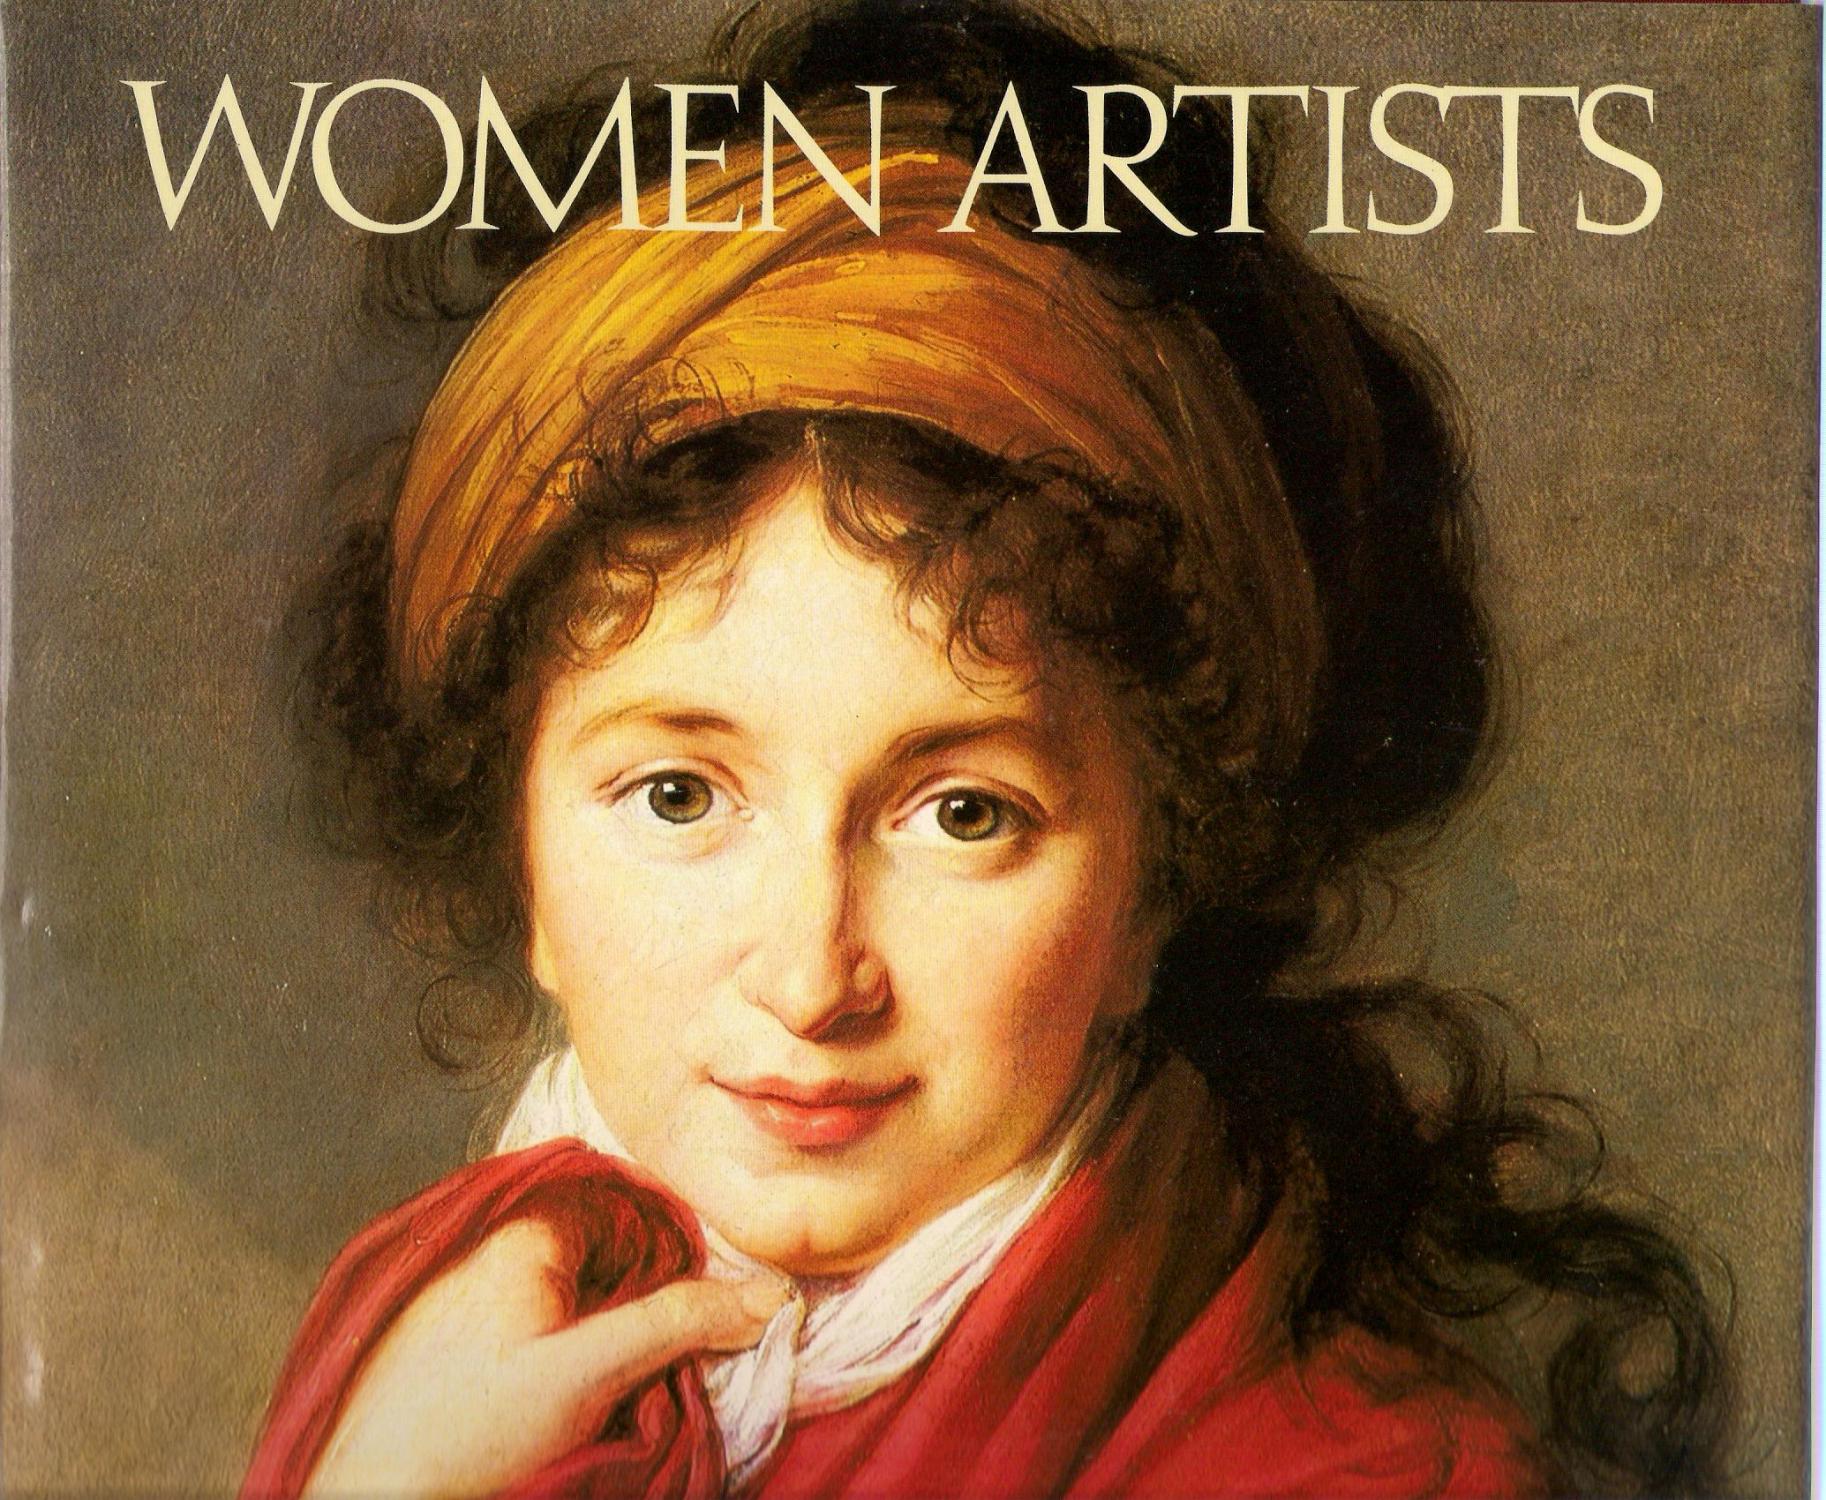 An Illustrated History of Women Artists - Heller, Nancy G.